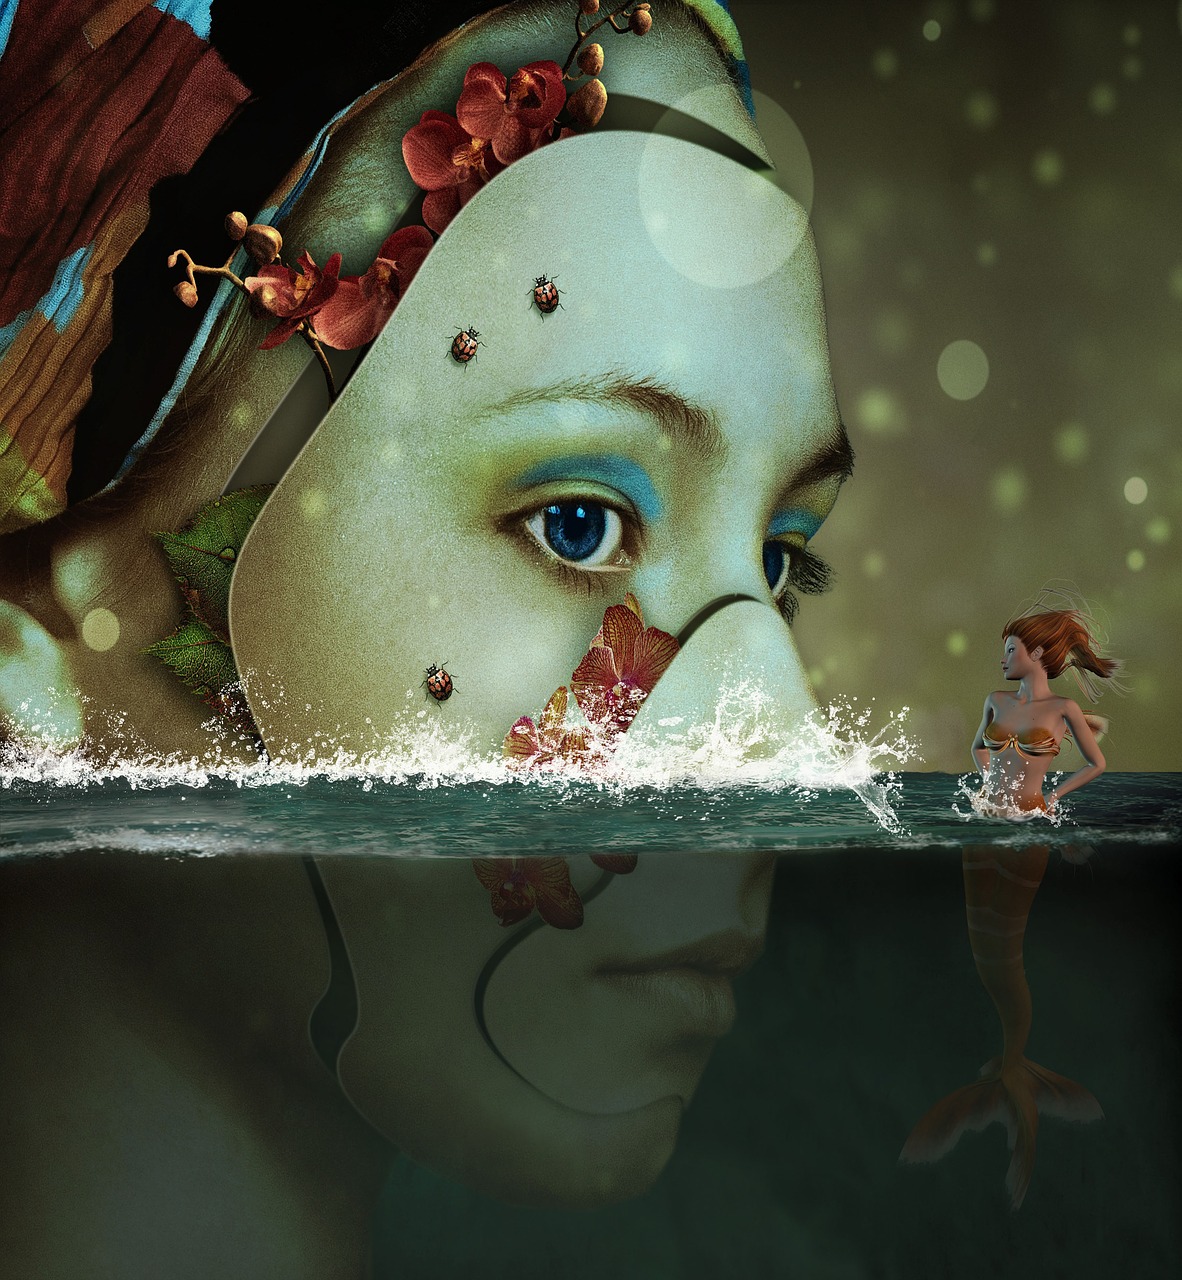 Image - woman mermaid water face fantasy